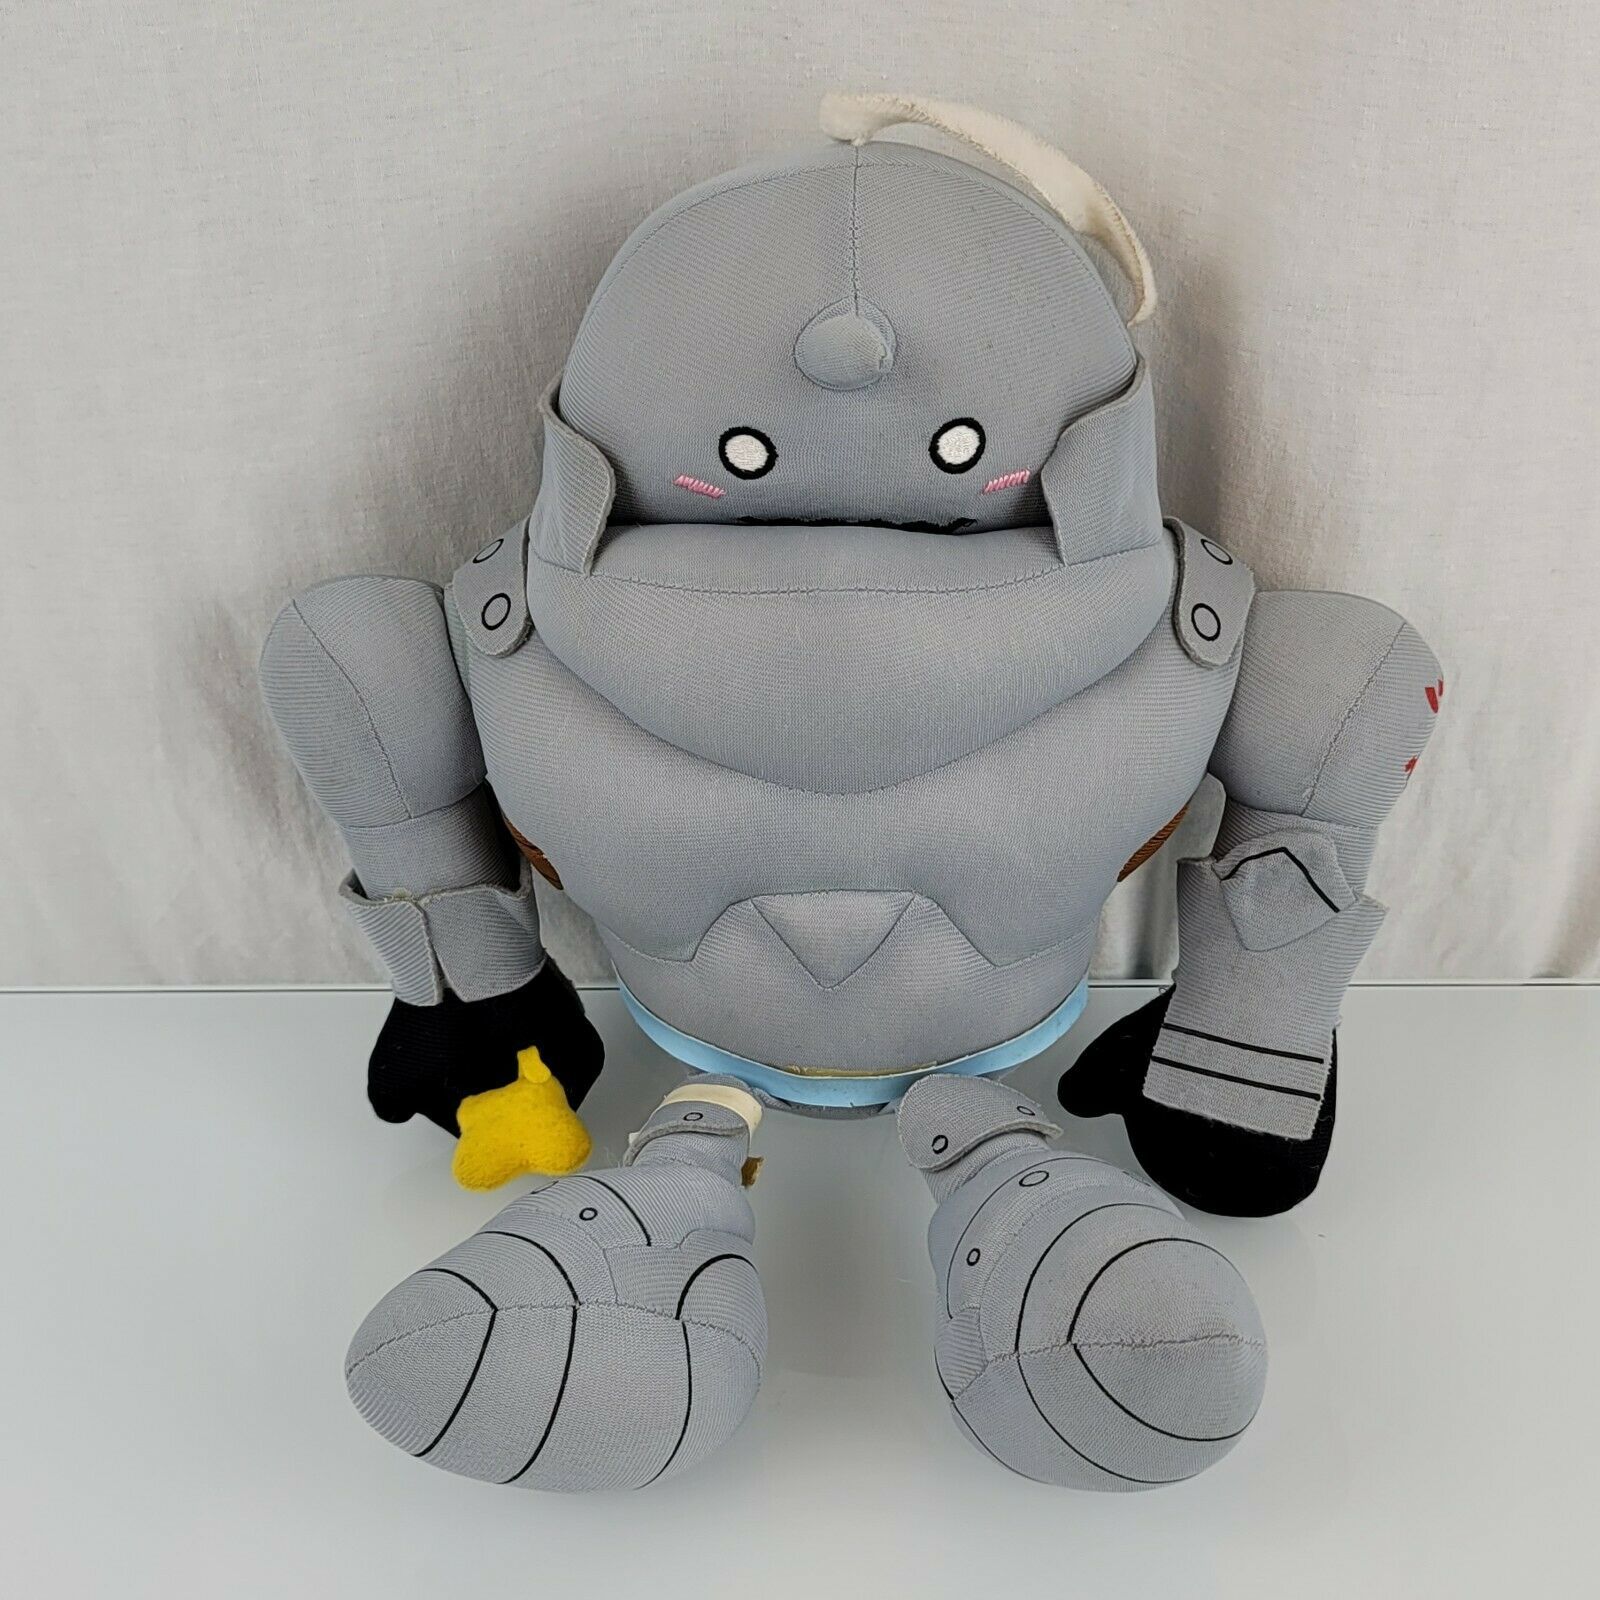 Alphonse Fullmetal Alchemist FMA 14" plush doll 2004 plushie anime kawaii Robot - $69.29